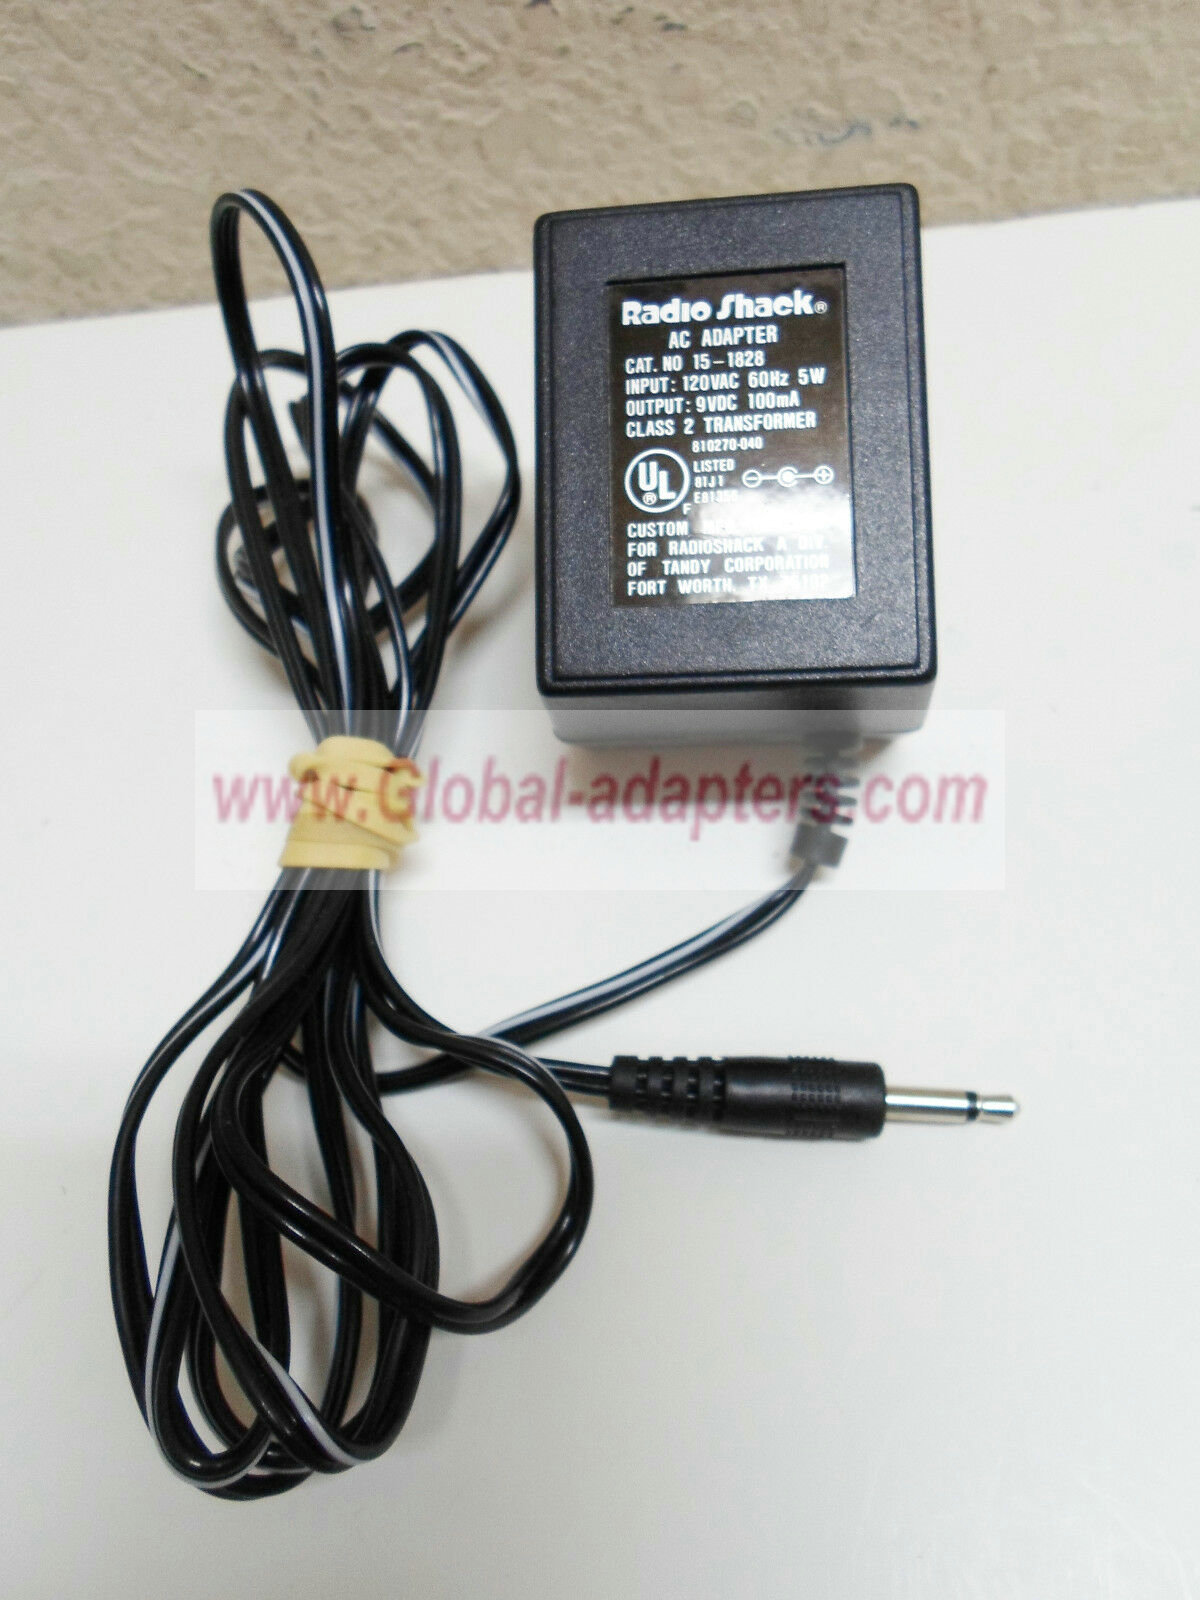 NEW 9VDC 100mA Radio Shack 15-1828 AC Adapter